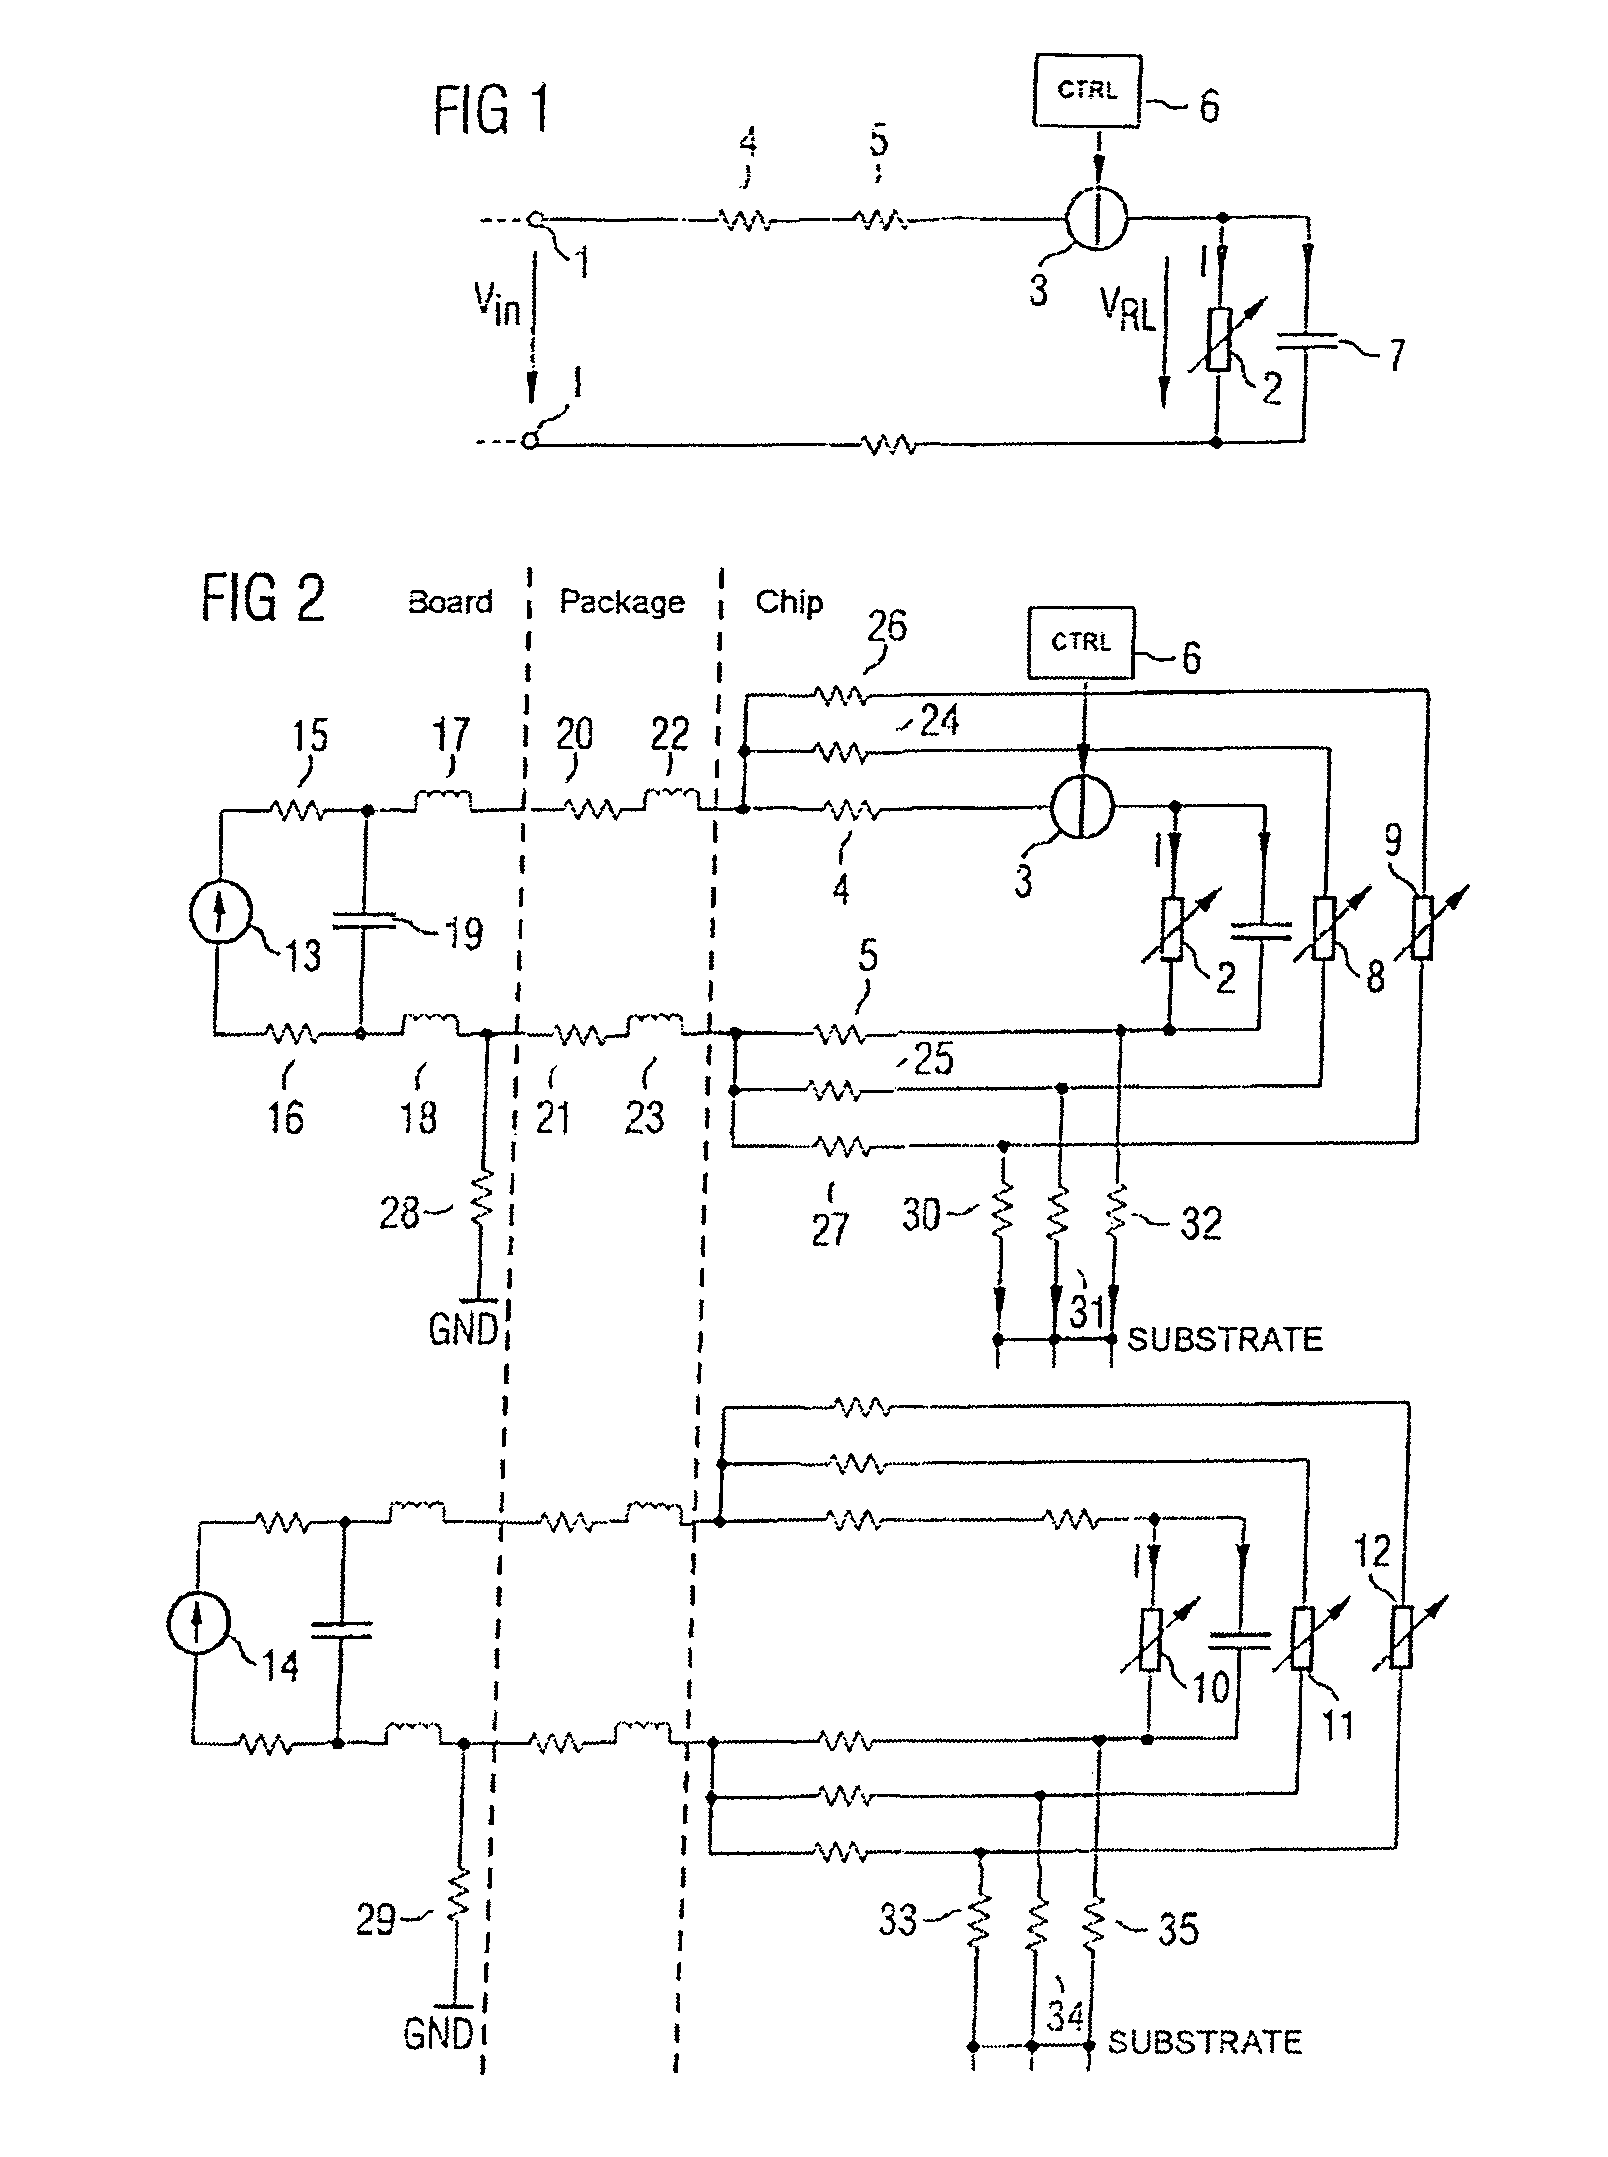 Current controlling circuit arrangement and associated method for reducing crosstalk